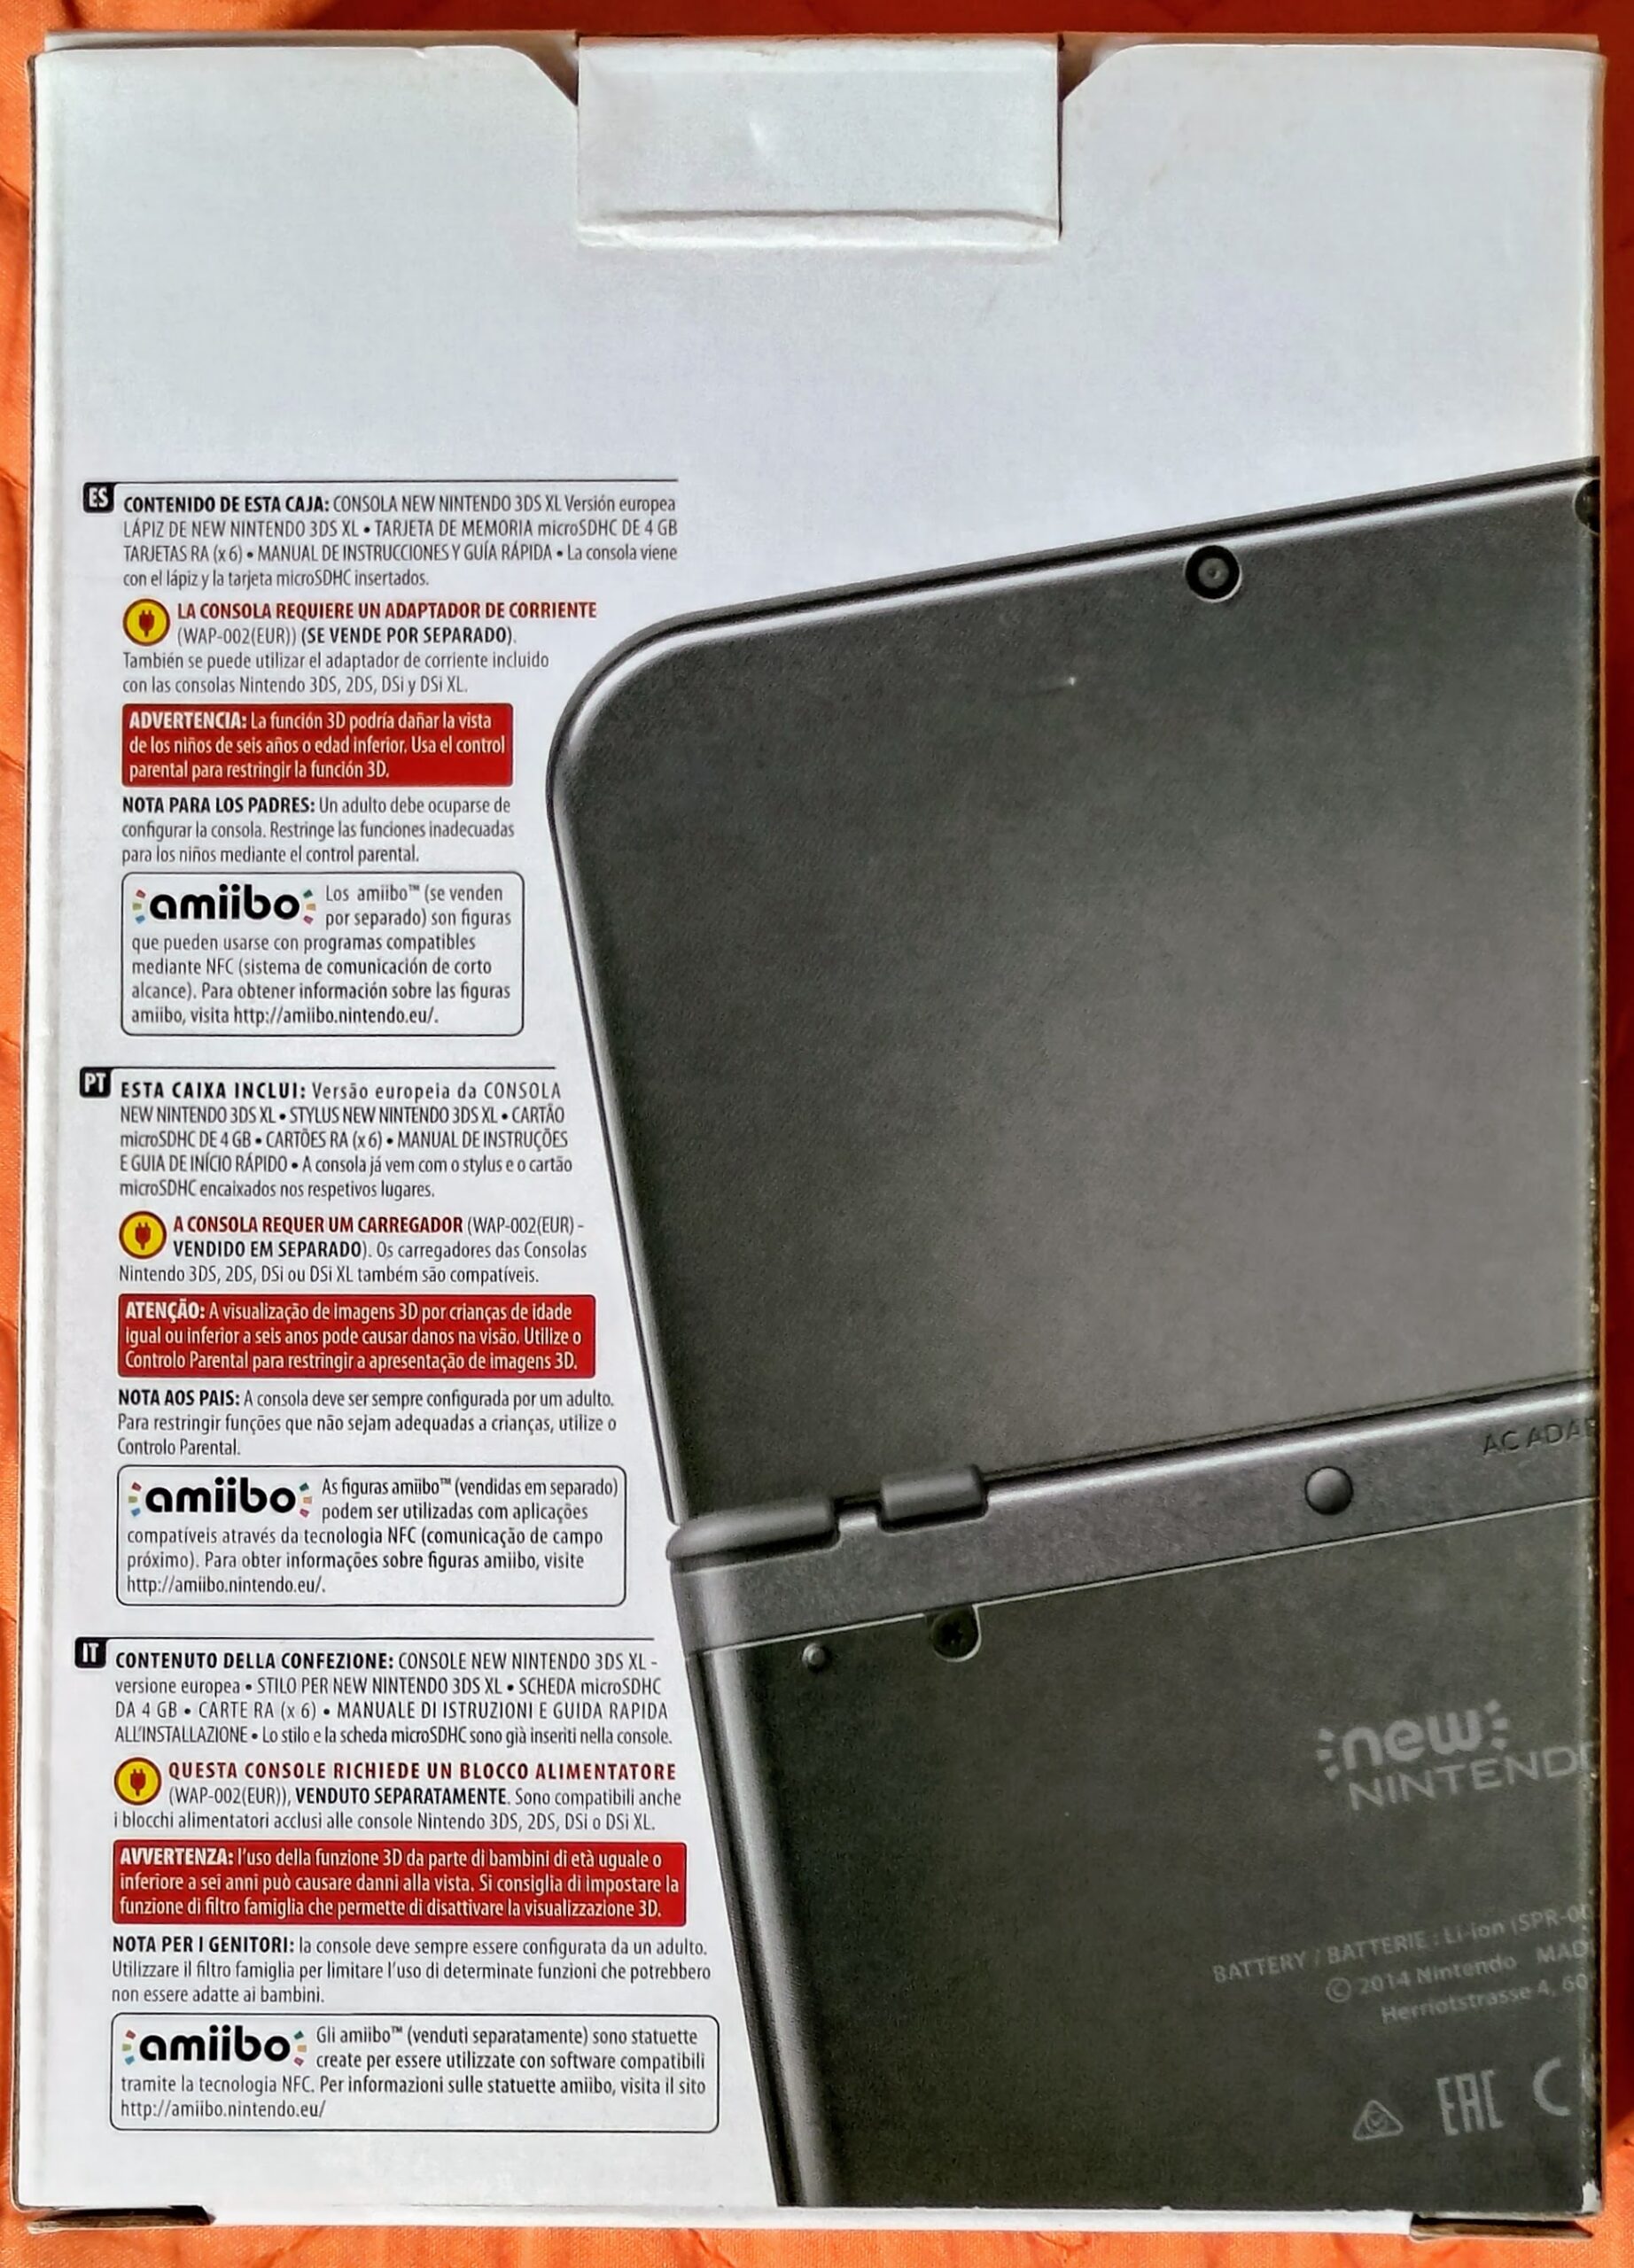 New Nintendo 3DS XL "Nero Metallico", vista posteriormente